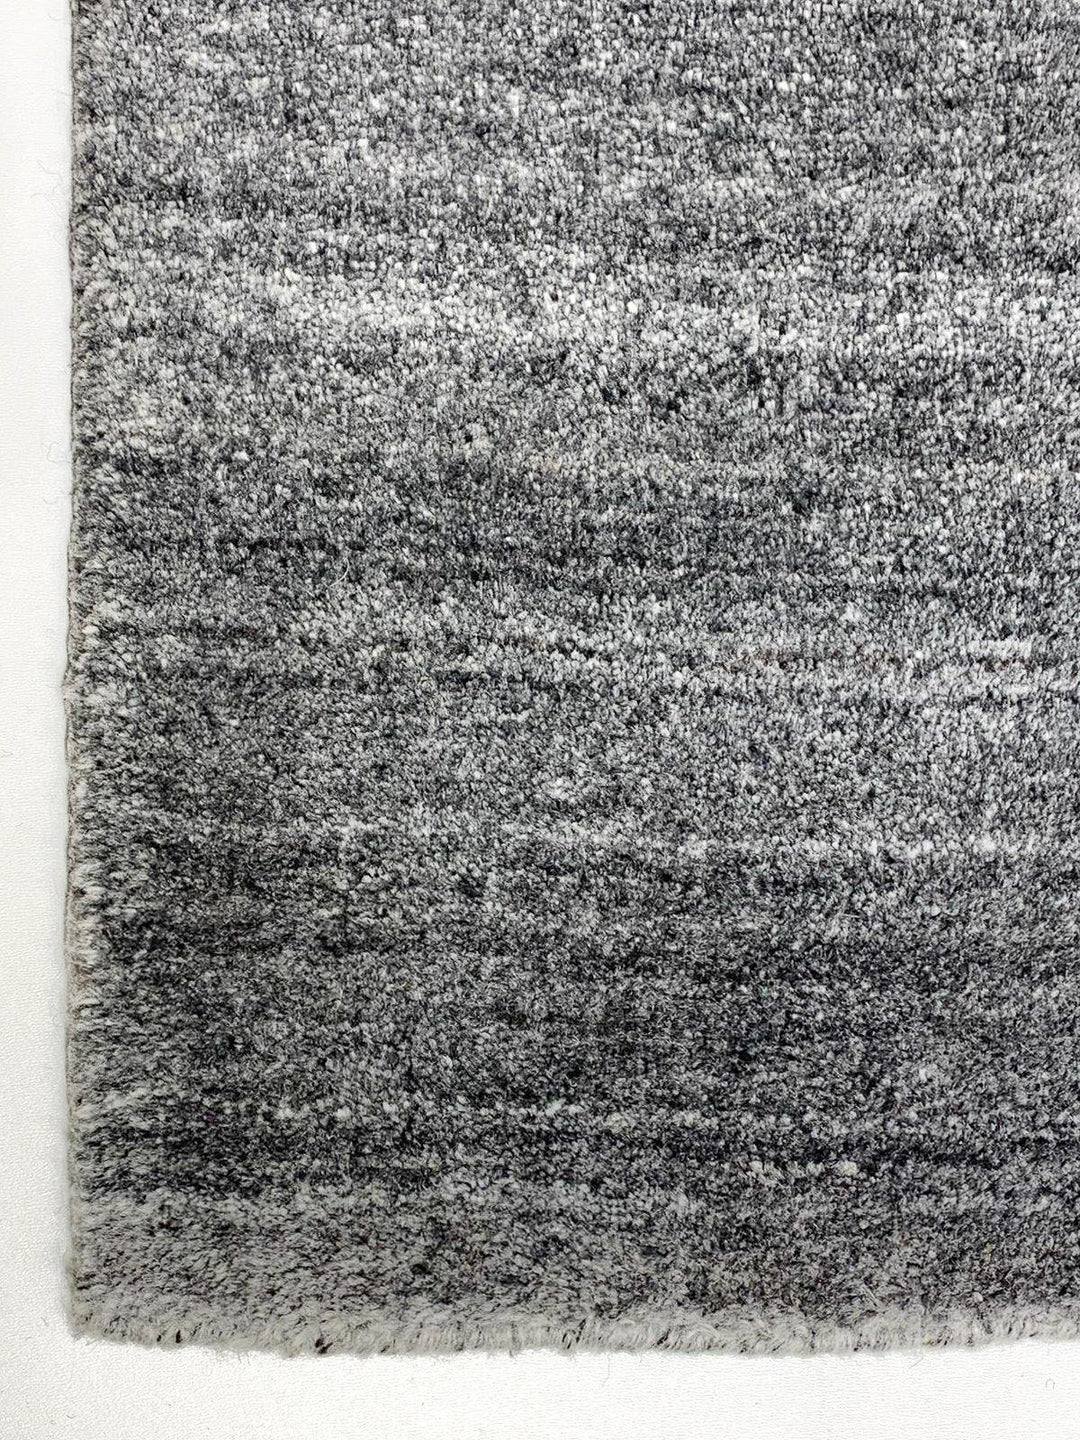 Akita Dark grey rug corner view horizontal texture